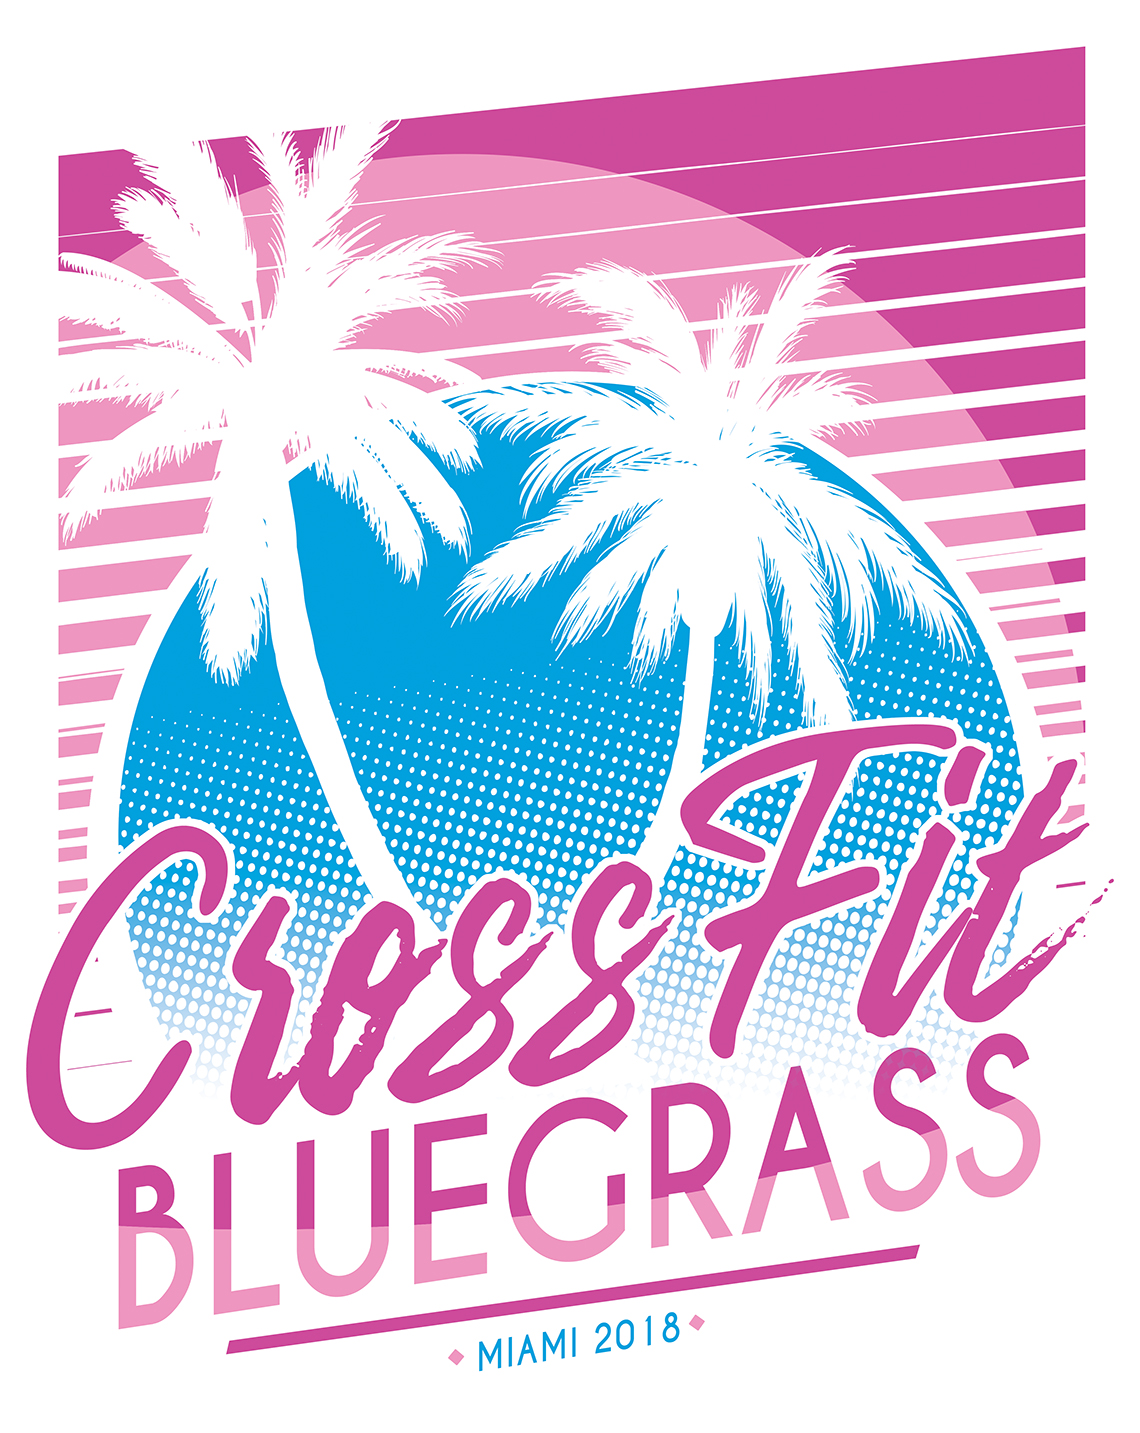 CrossFit Bluegrass Apparel